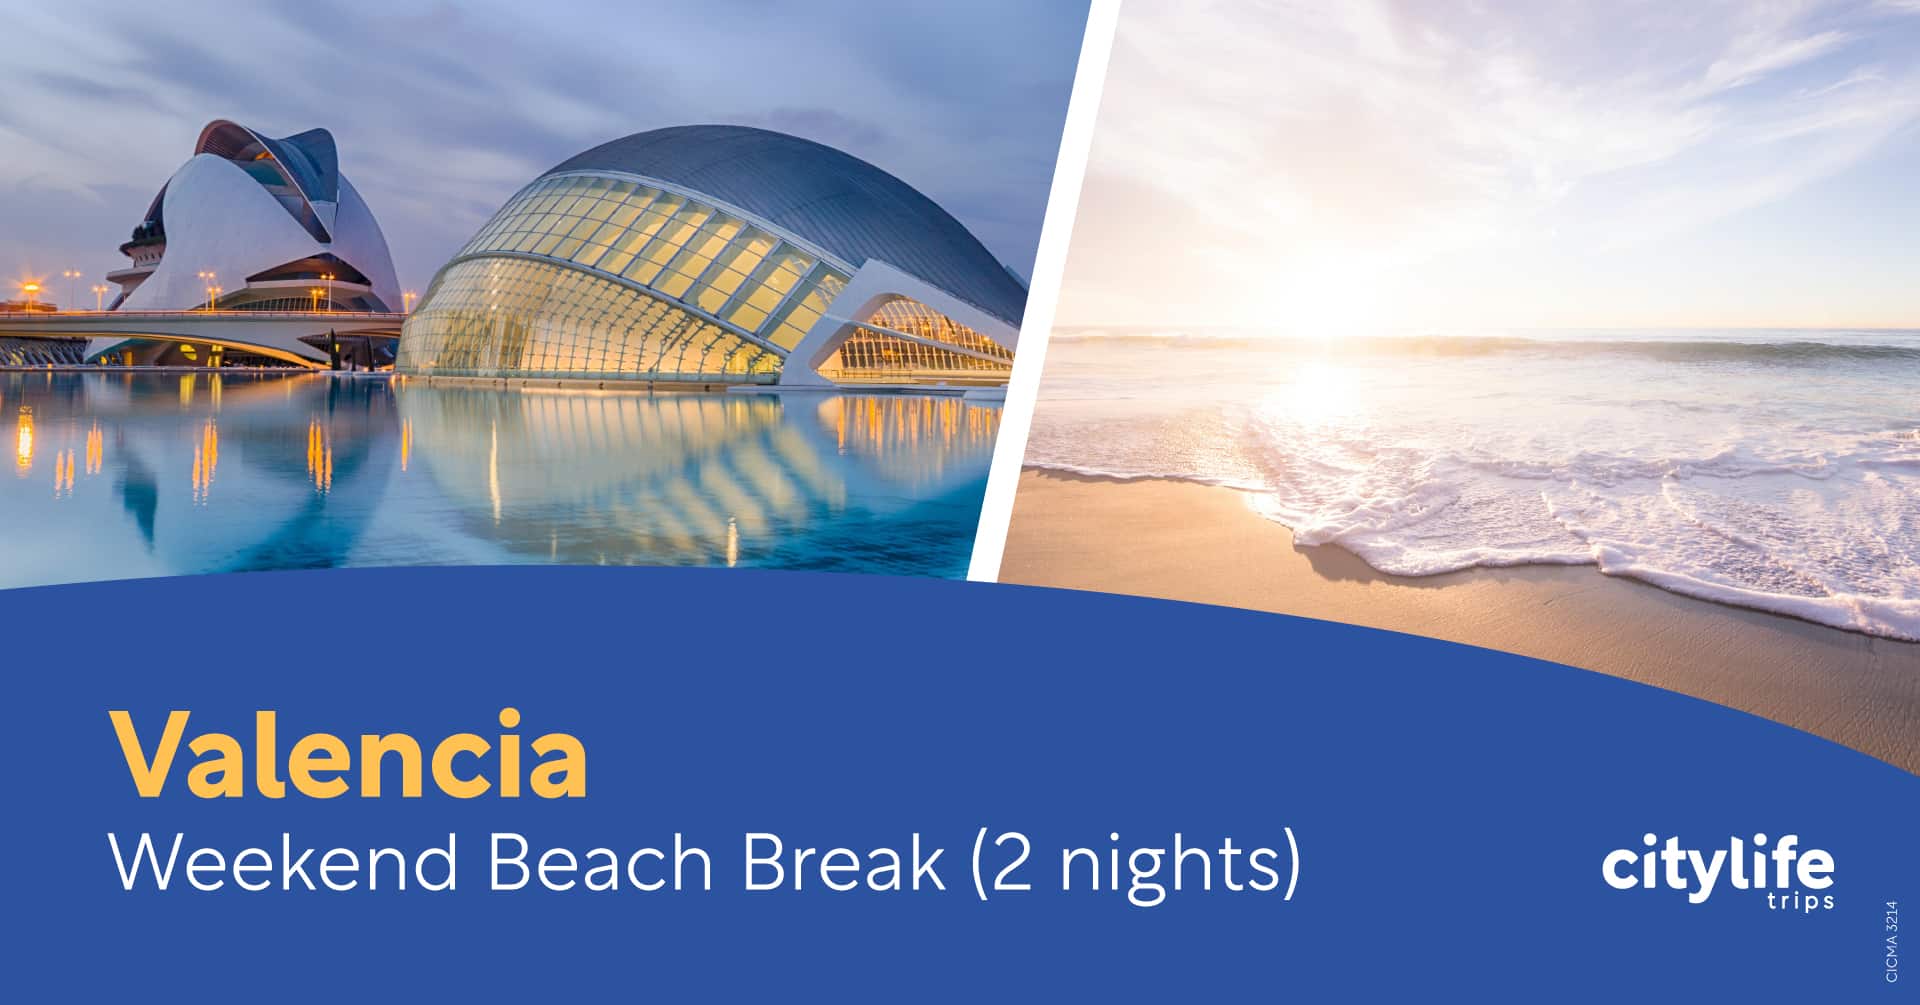 fb-event-valencia-weekend-beach-break-2-nights